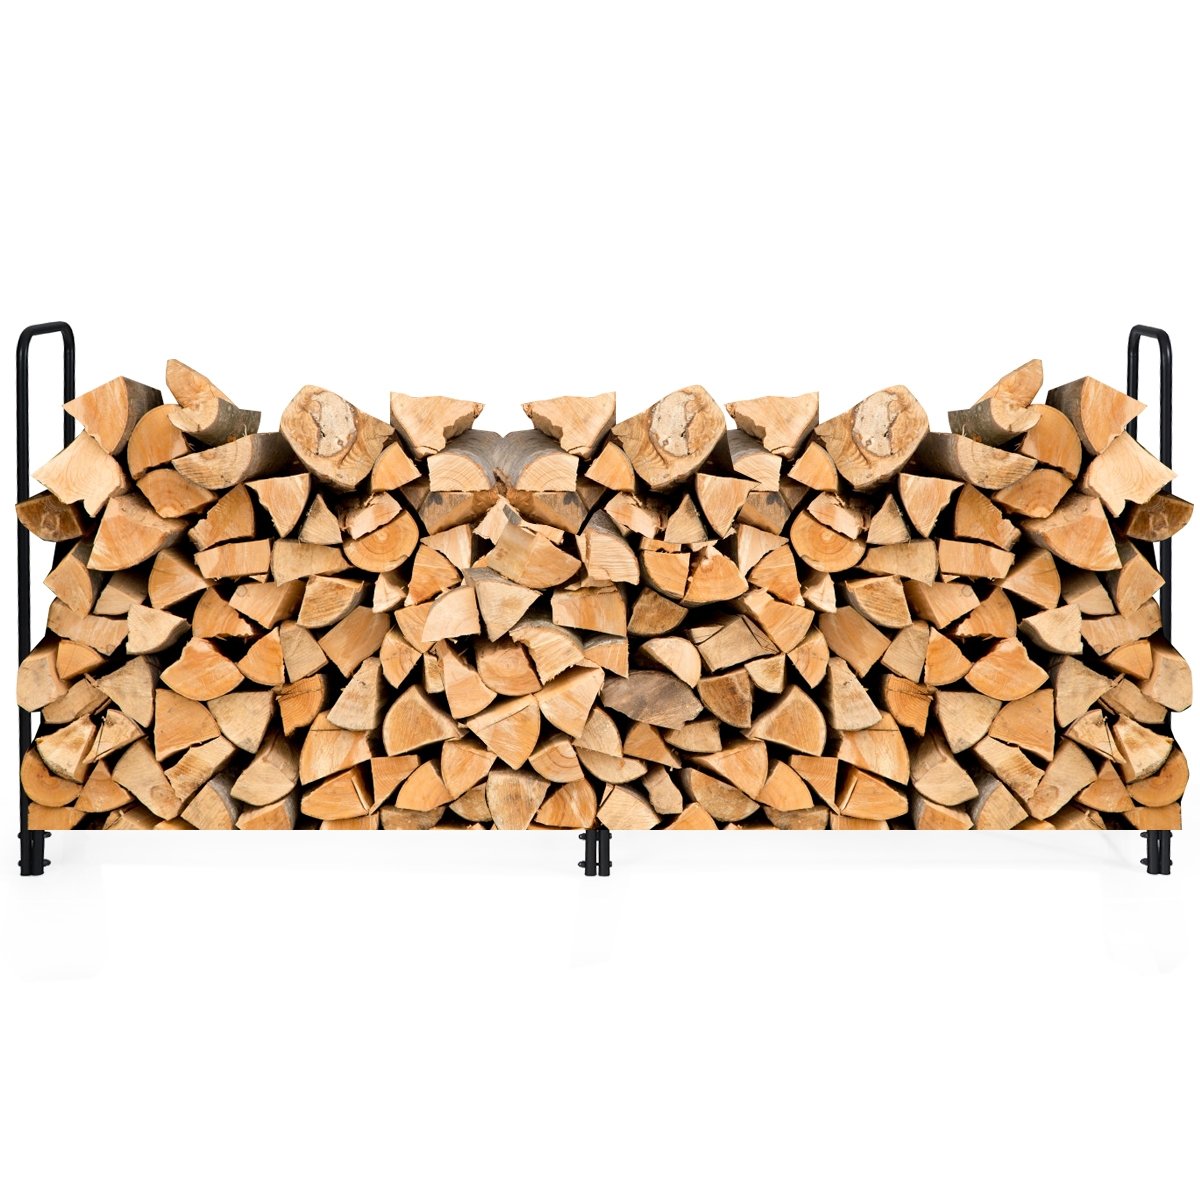 8 Feet Outdoor Steel Firewood Log Rack, Black